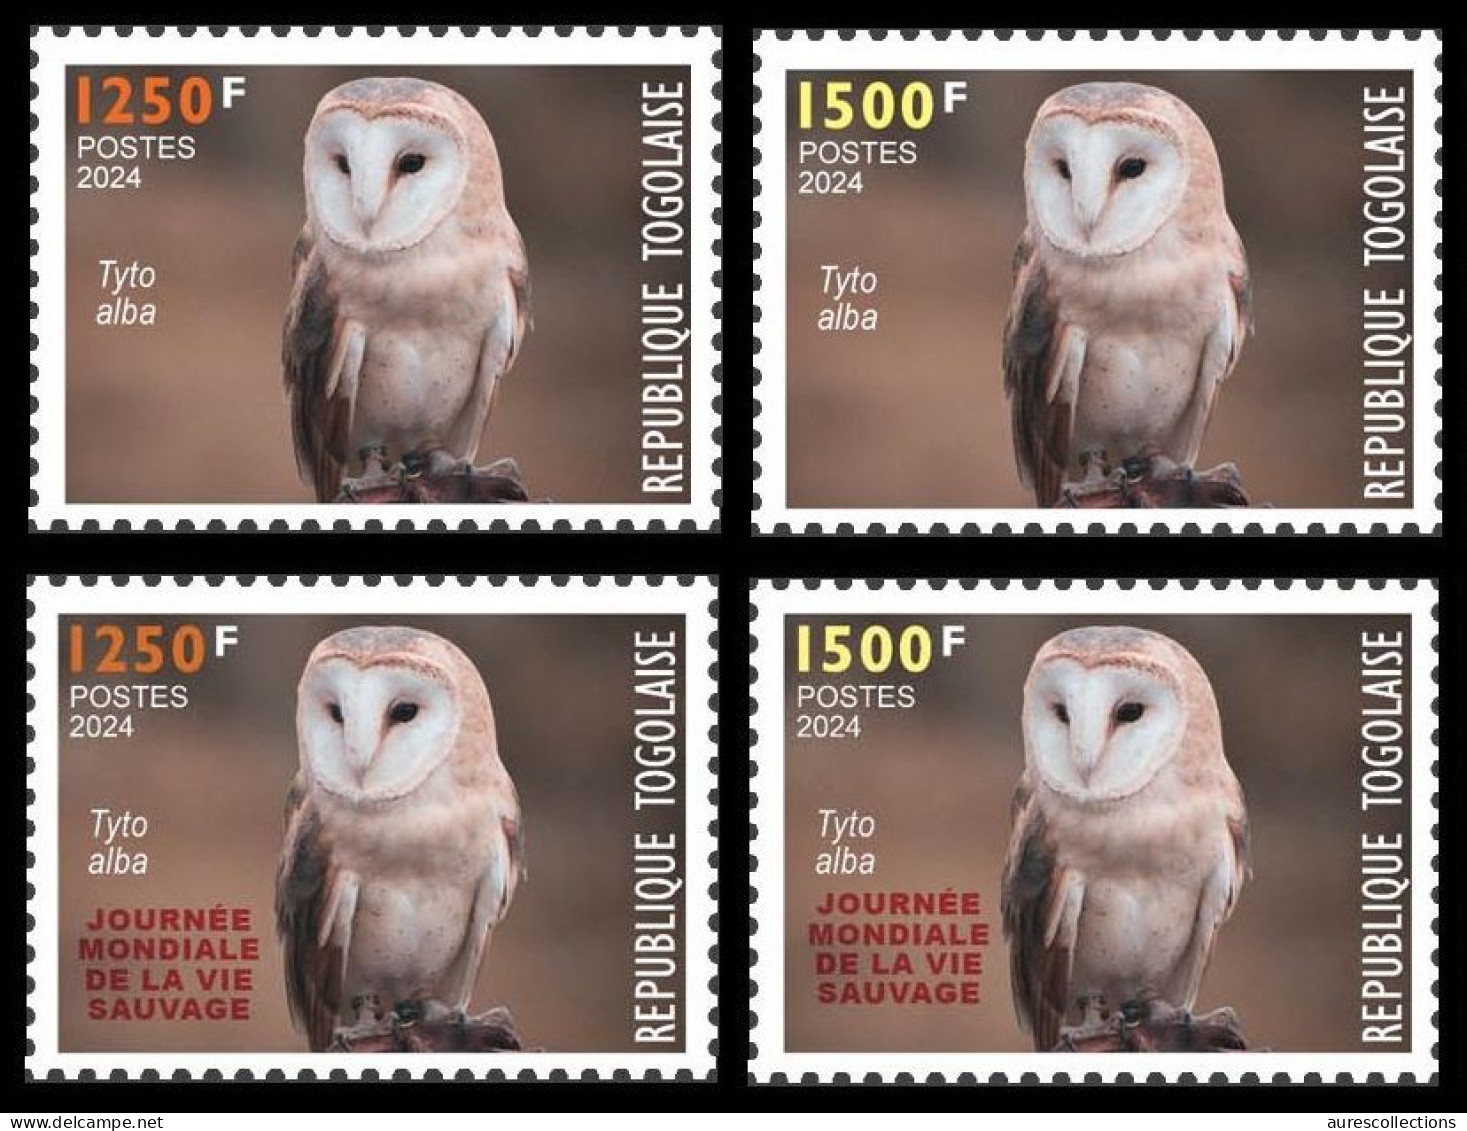 TOGO 2024 SET 4V - REGULAR & OVERPRINT - OWLS OWL HIBOU HIBOUX BIRDS OISEAUX - BIODIVERSITY BIODIVERSITE - MNH - Hiboux & Chouettes